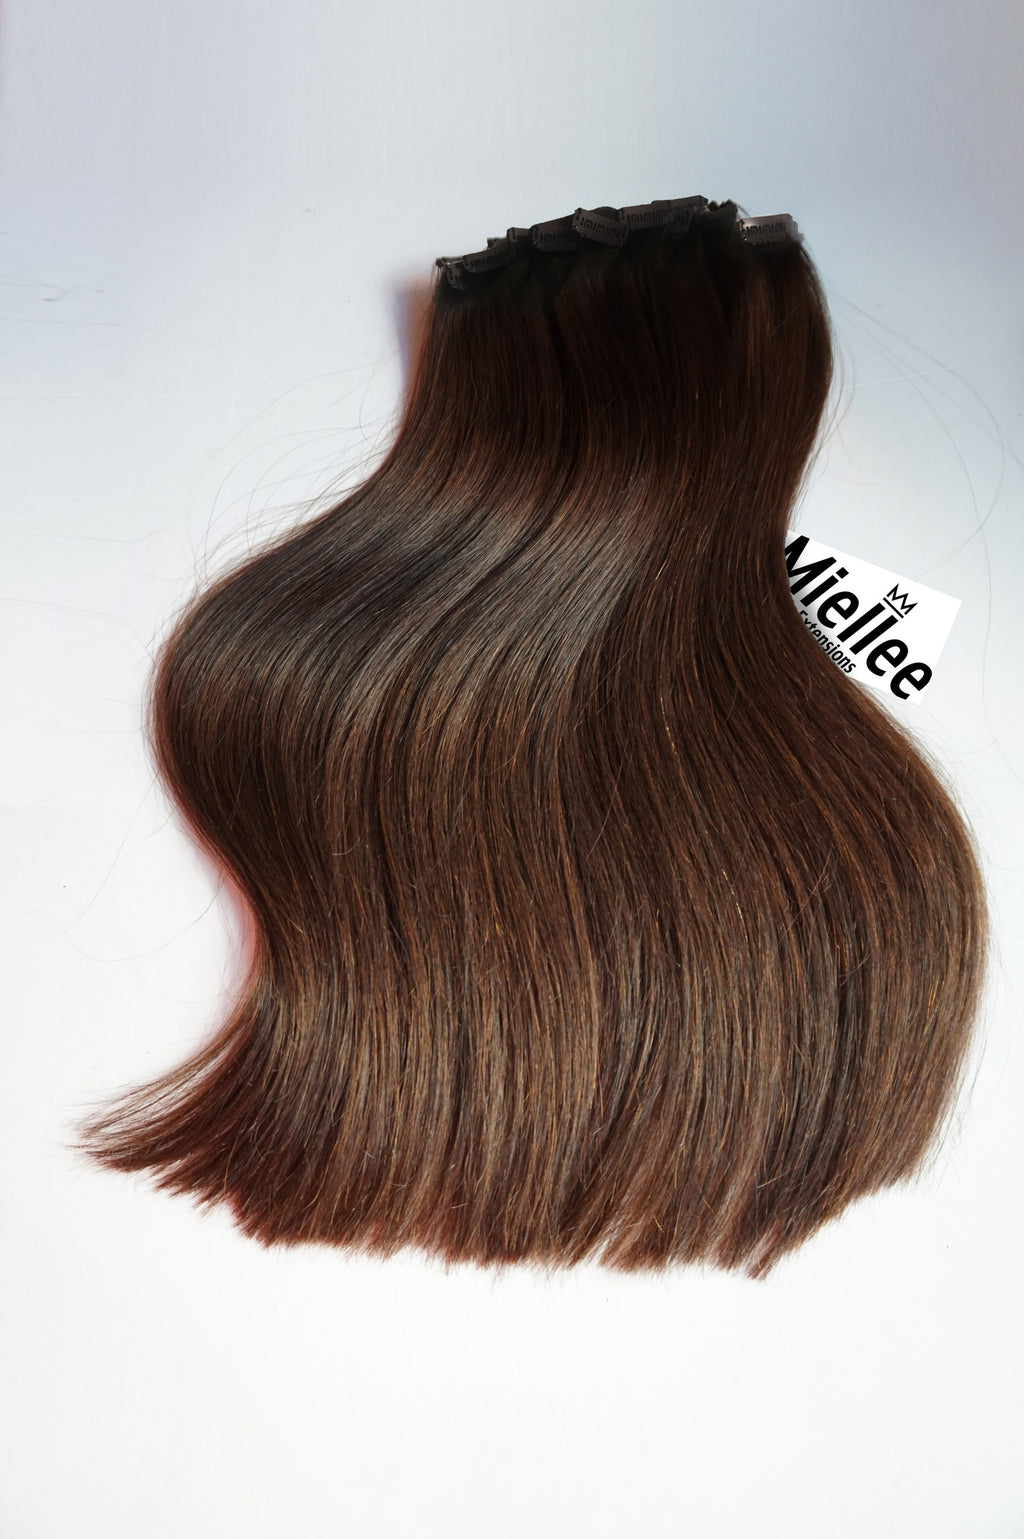 L'Oreal Excellence Creme 4.3 Dark Golden Brown Hair Colour